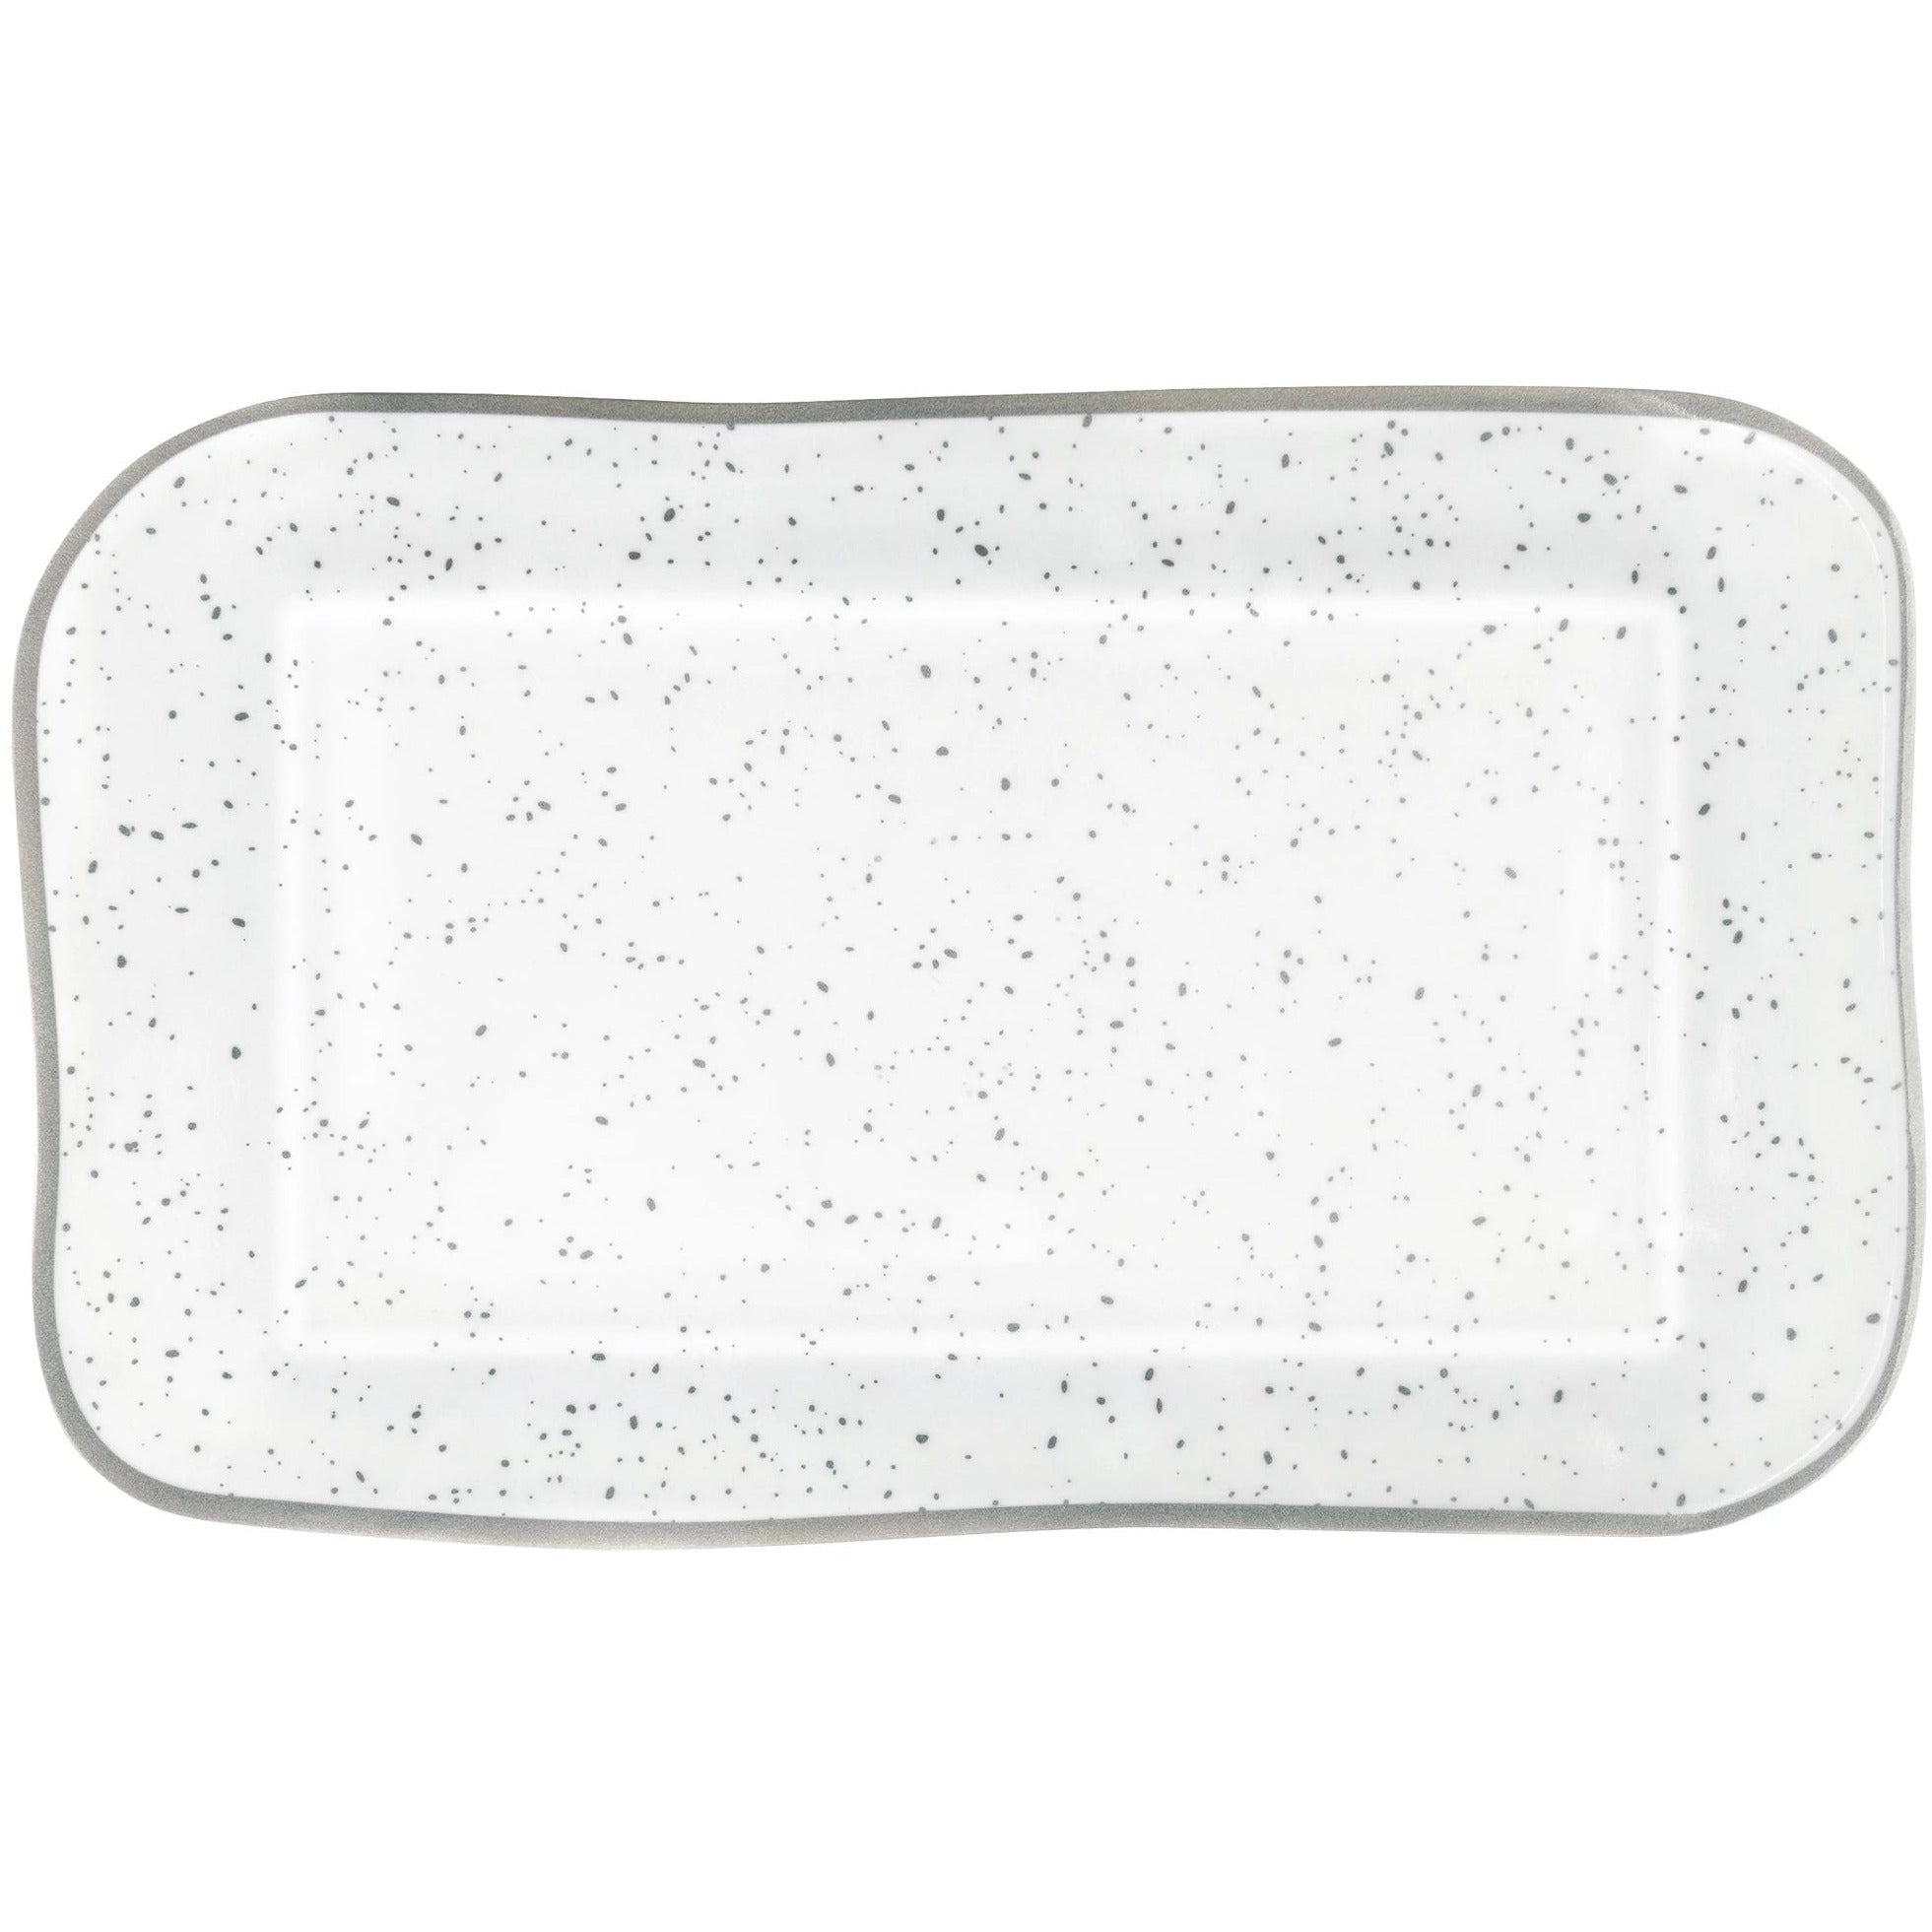 Amscan BASIC Large Melamine Rectangular Platter - Silver Speckle